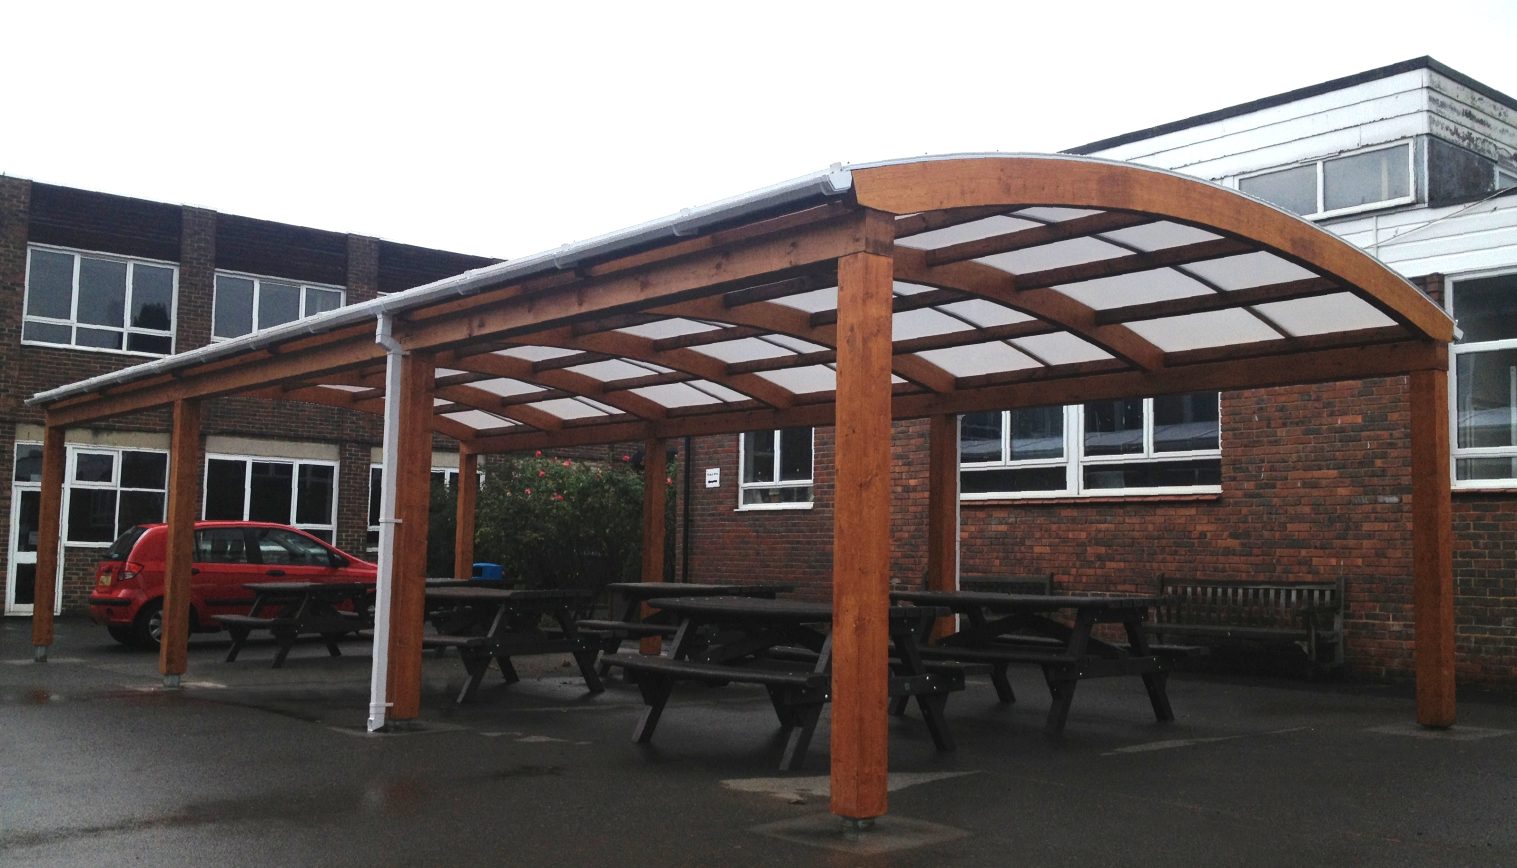 Carshalton High School for Girls – Third Timber Canopy